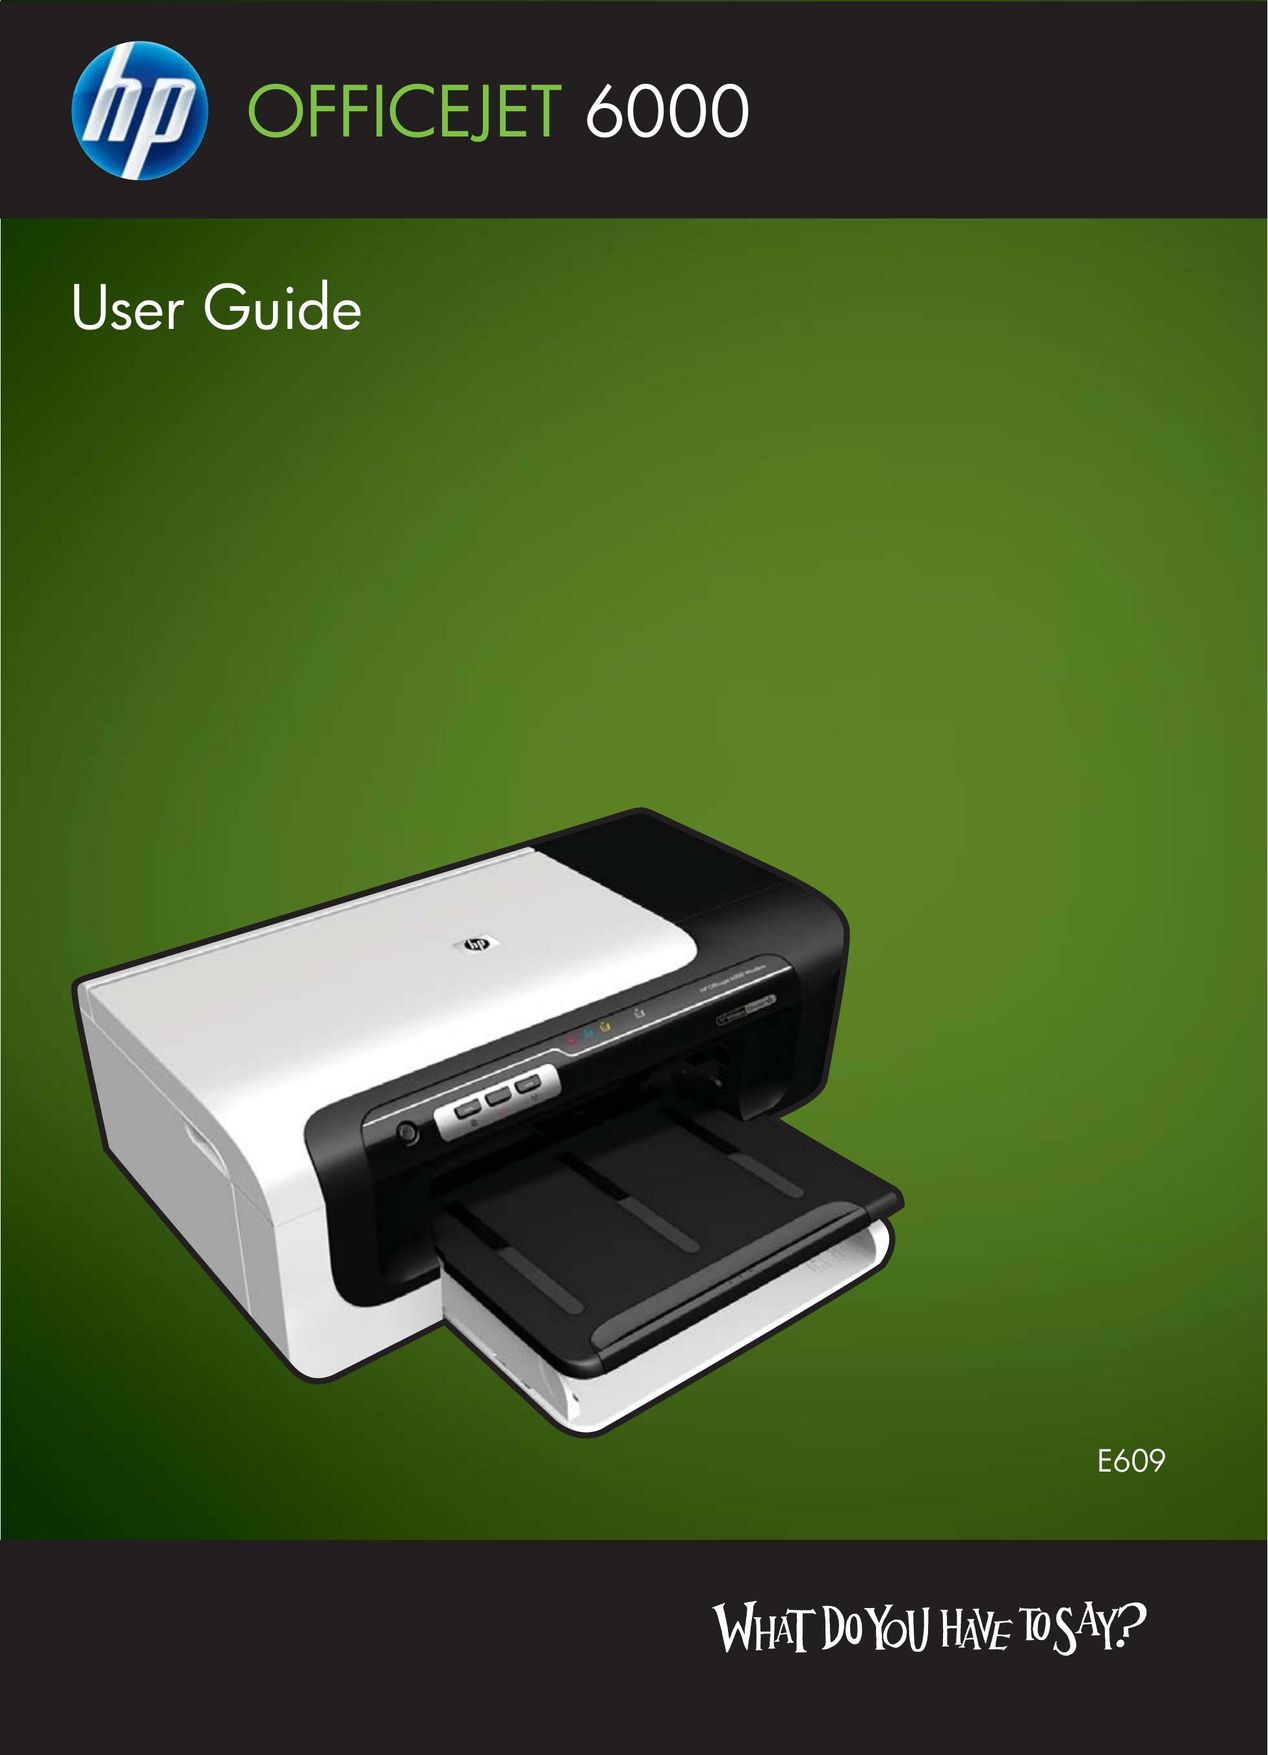 Hitachi E609 Printer User Manual